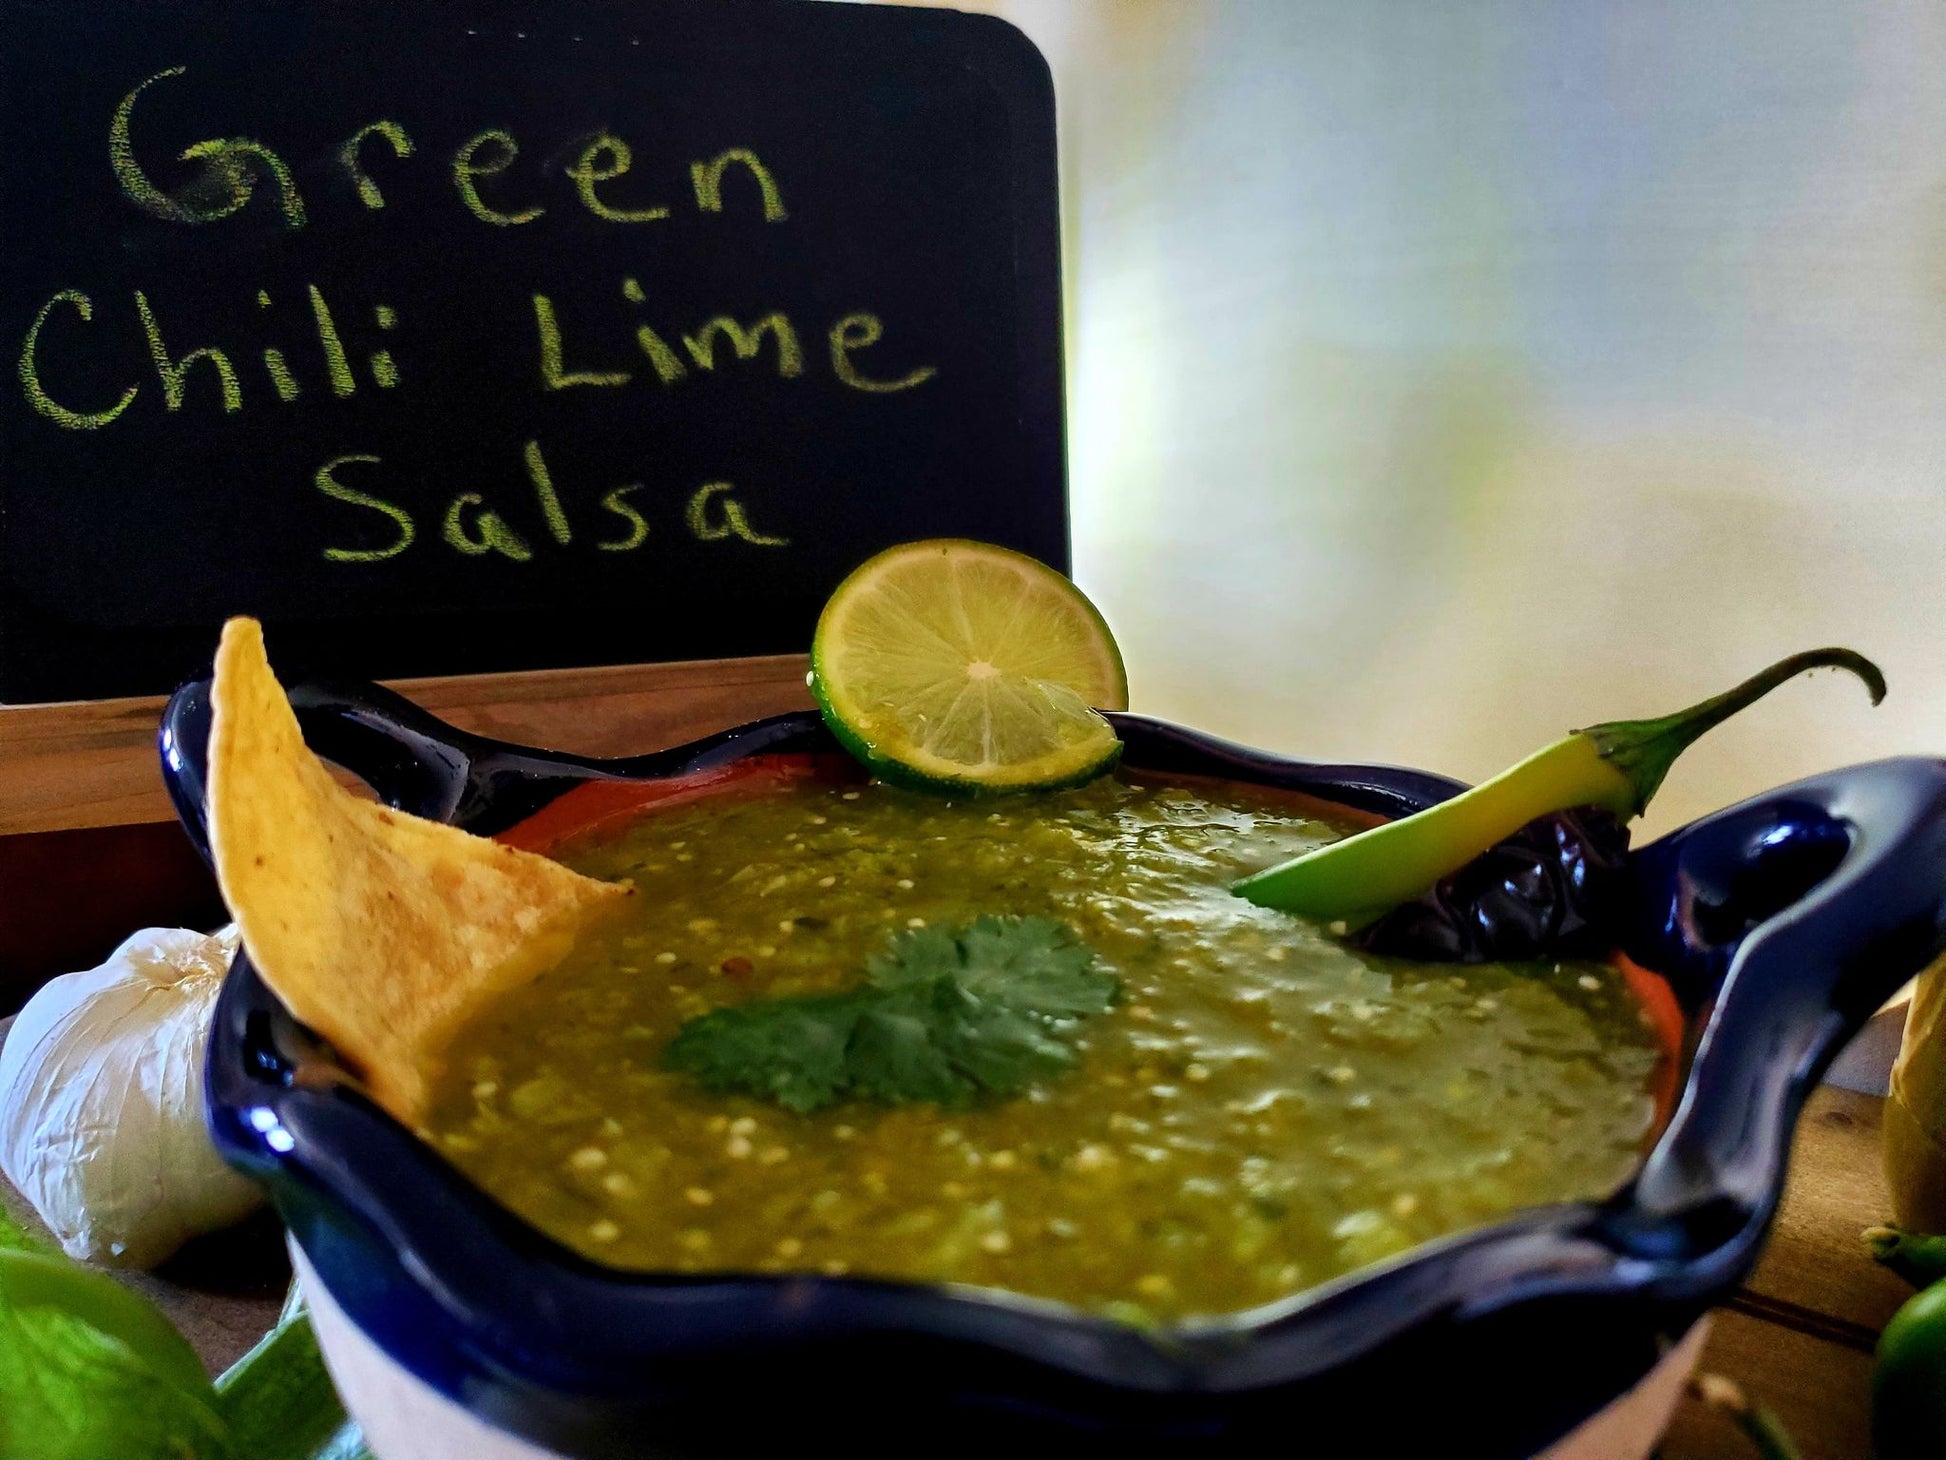 Kristy Ann's Salsa: Green Chili Lime (24 oz)